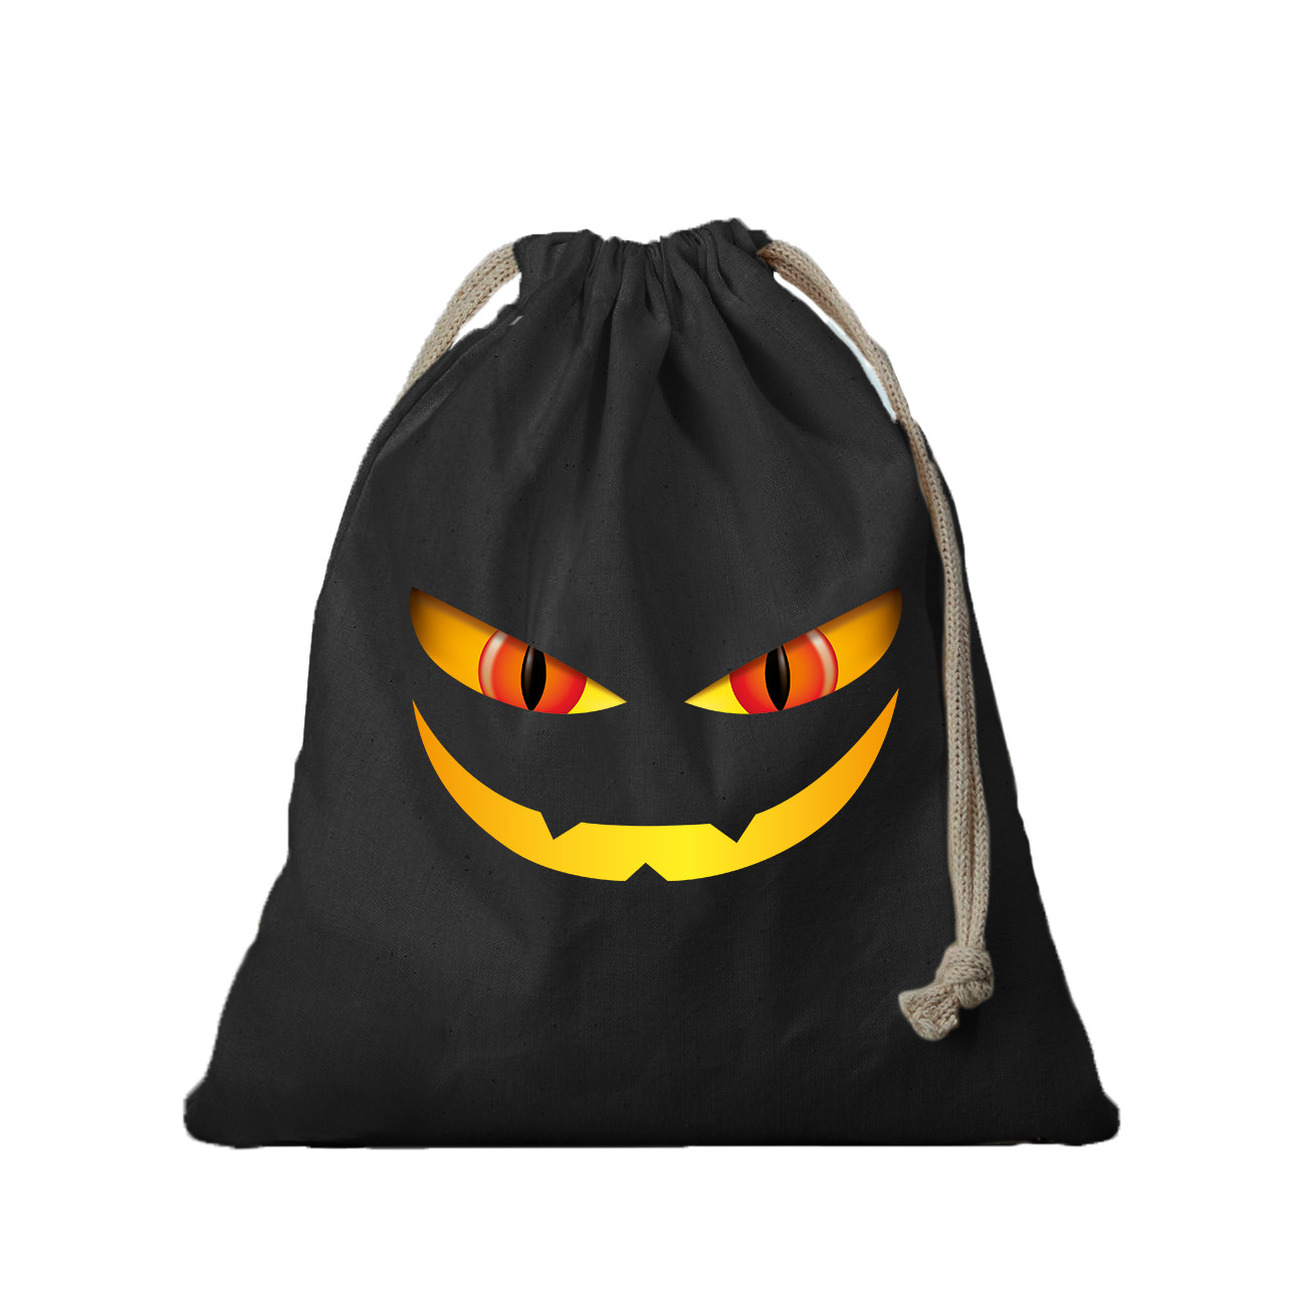 3x Katoenen Halloween snoep tasje monster gezicht zwart 25 x 30 cm